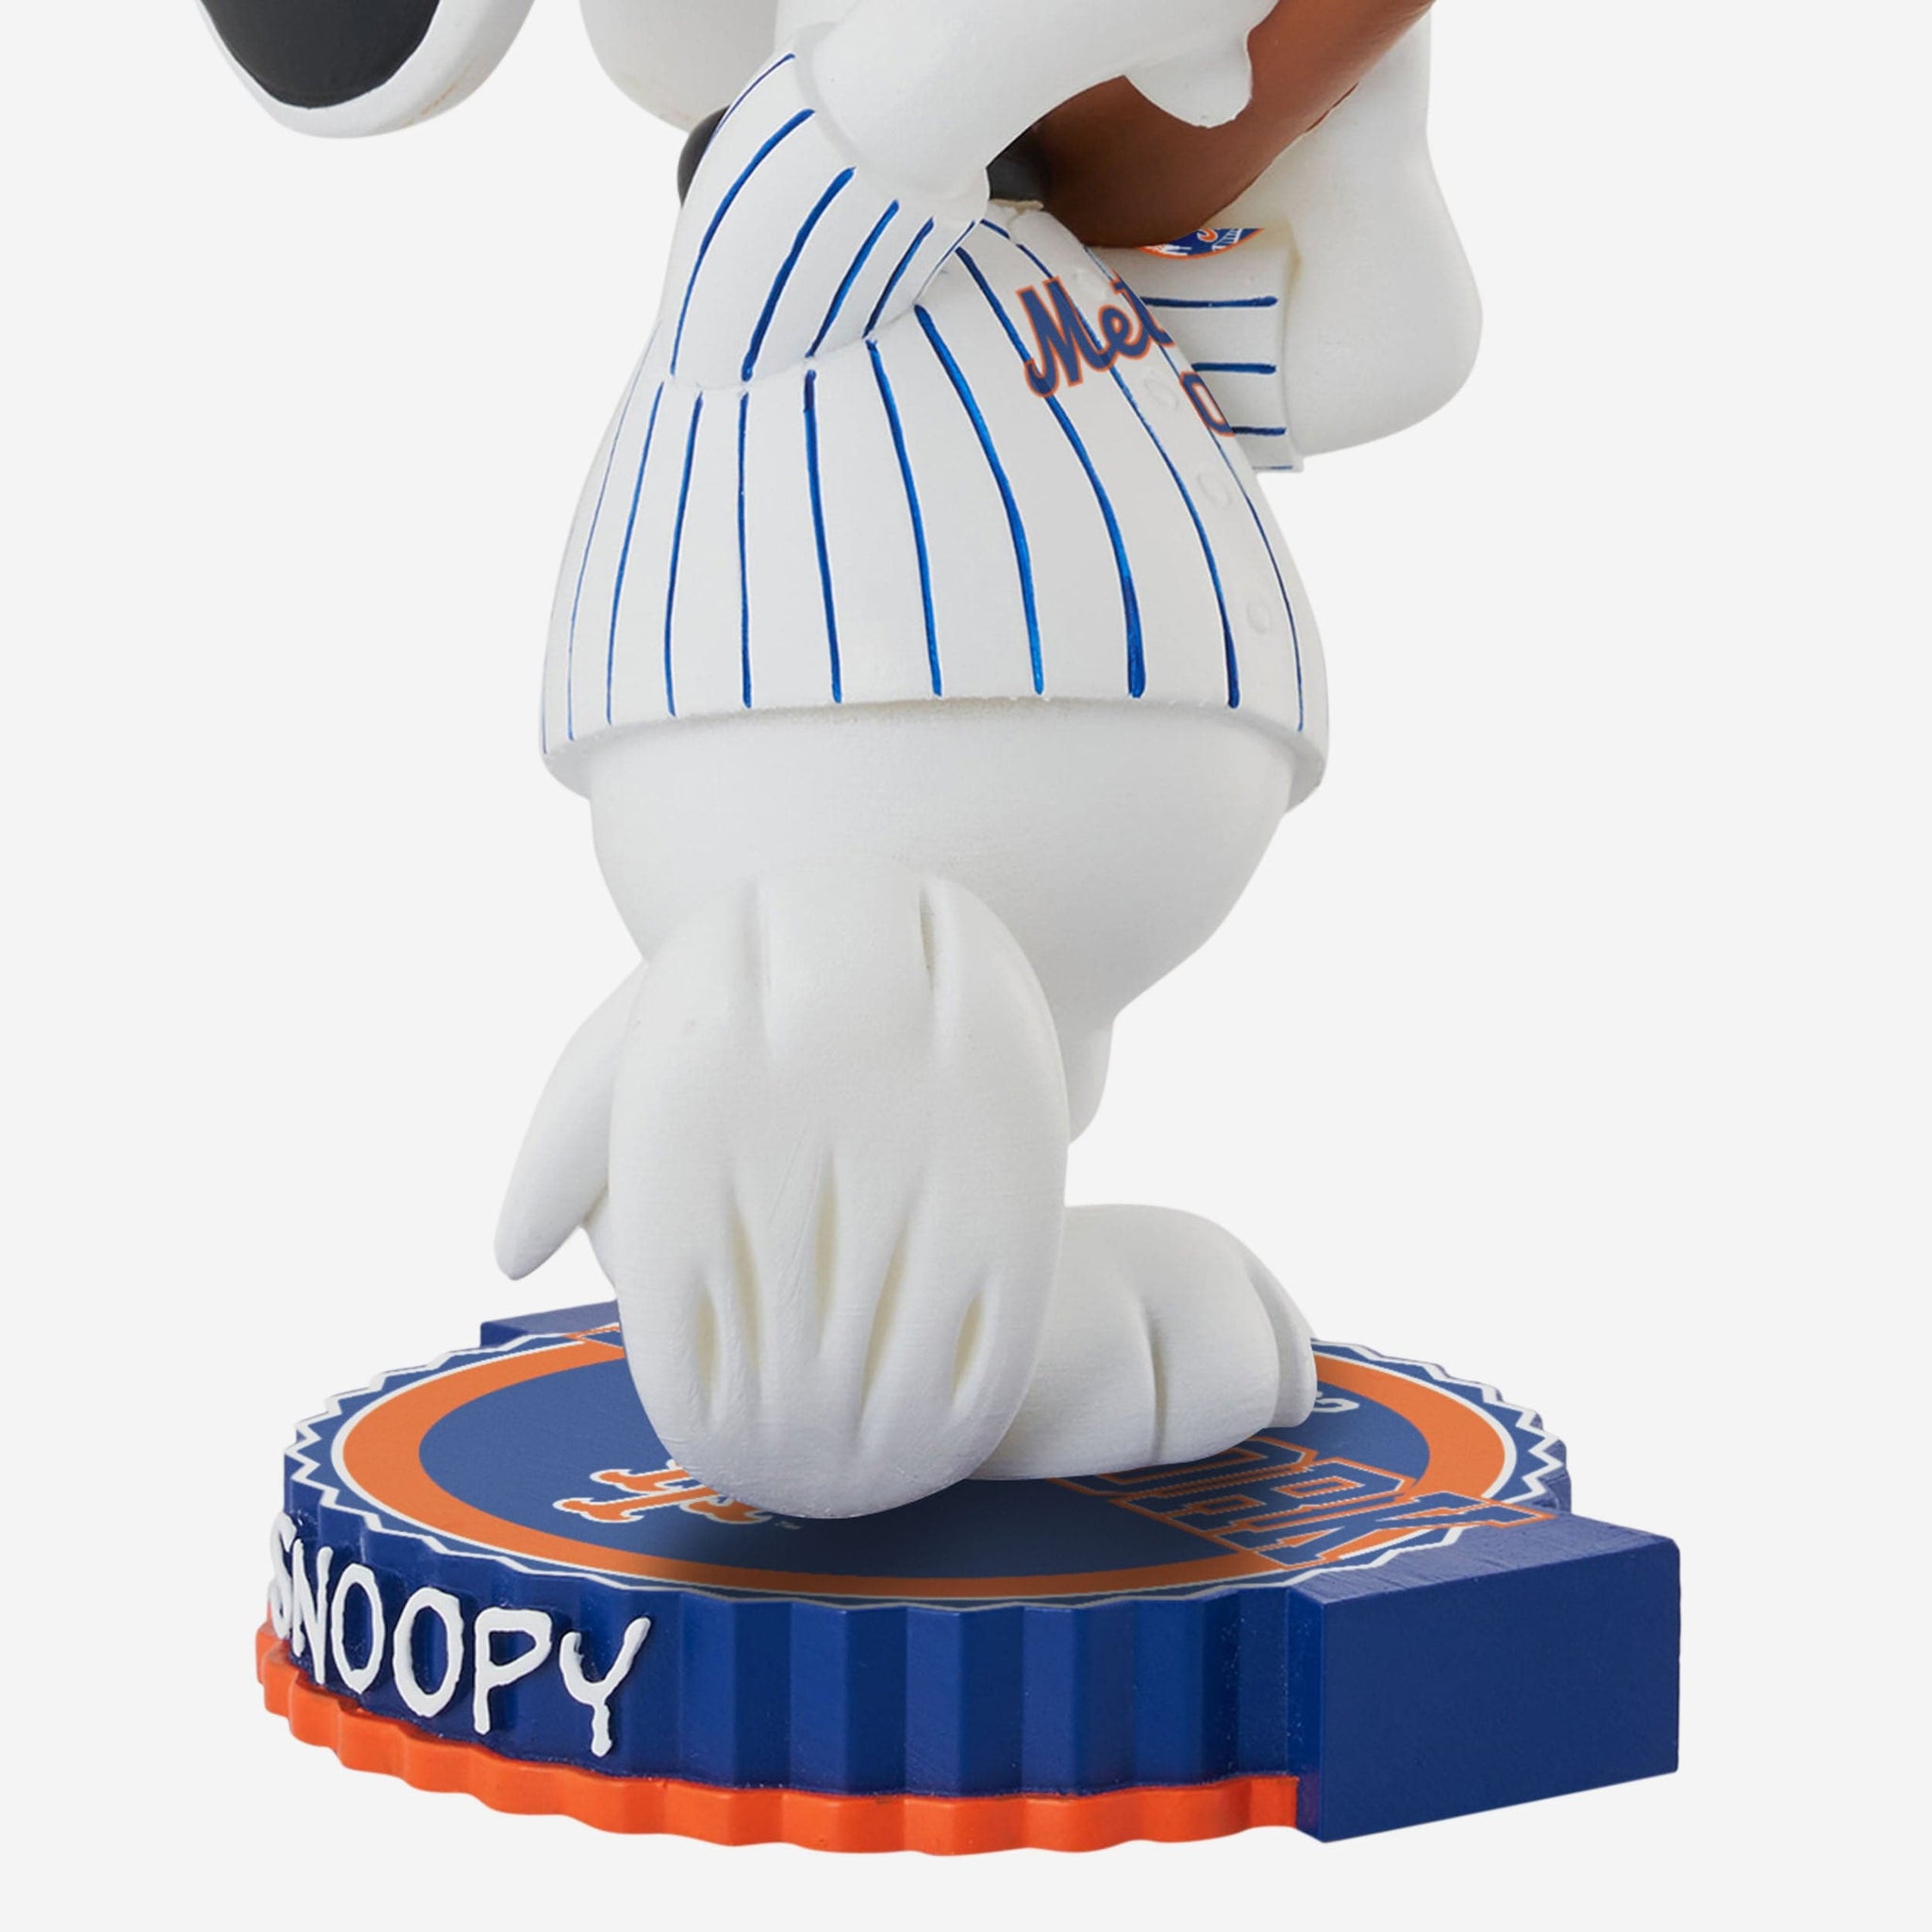 New York Mets Snoopy Peanuts Bighead Bobblehead FOCO